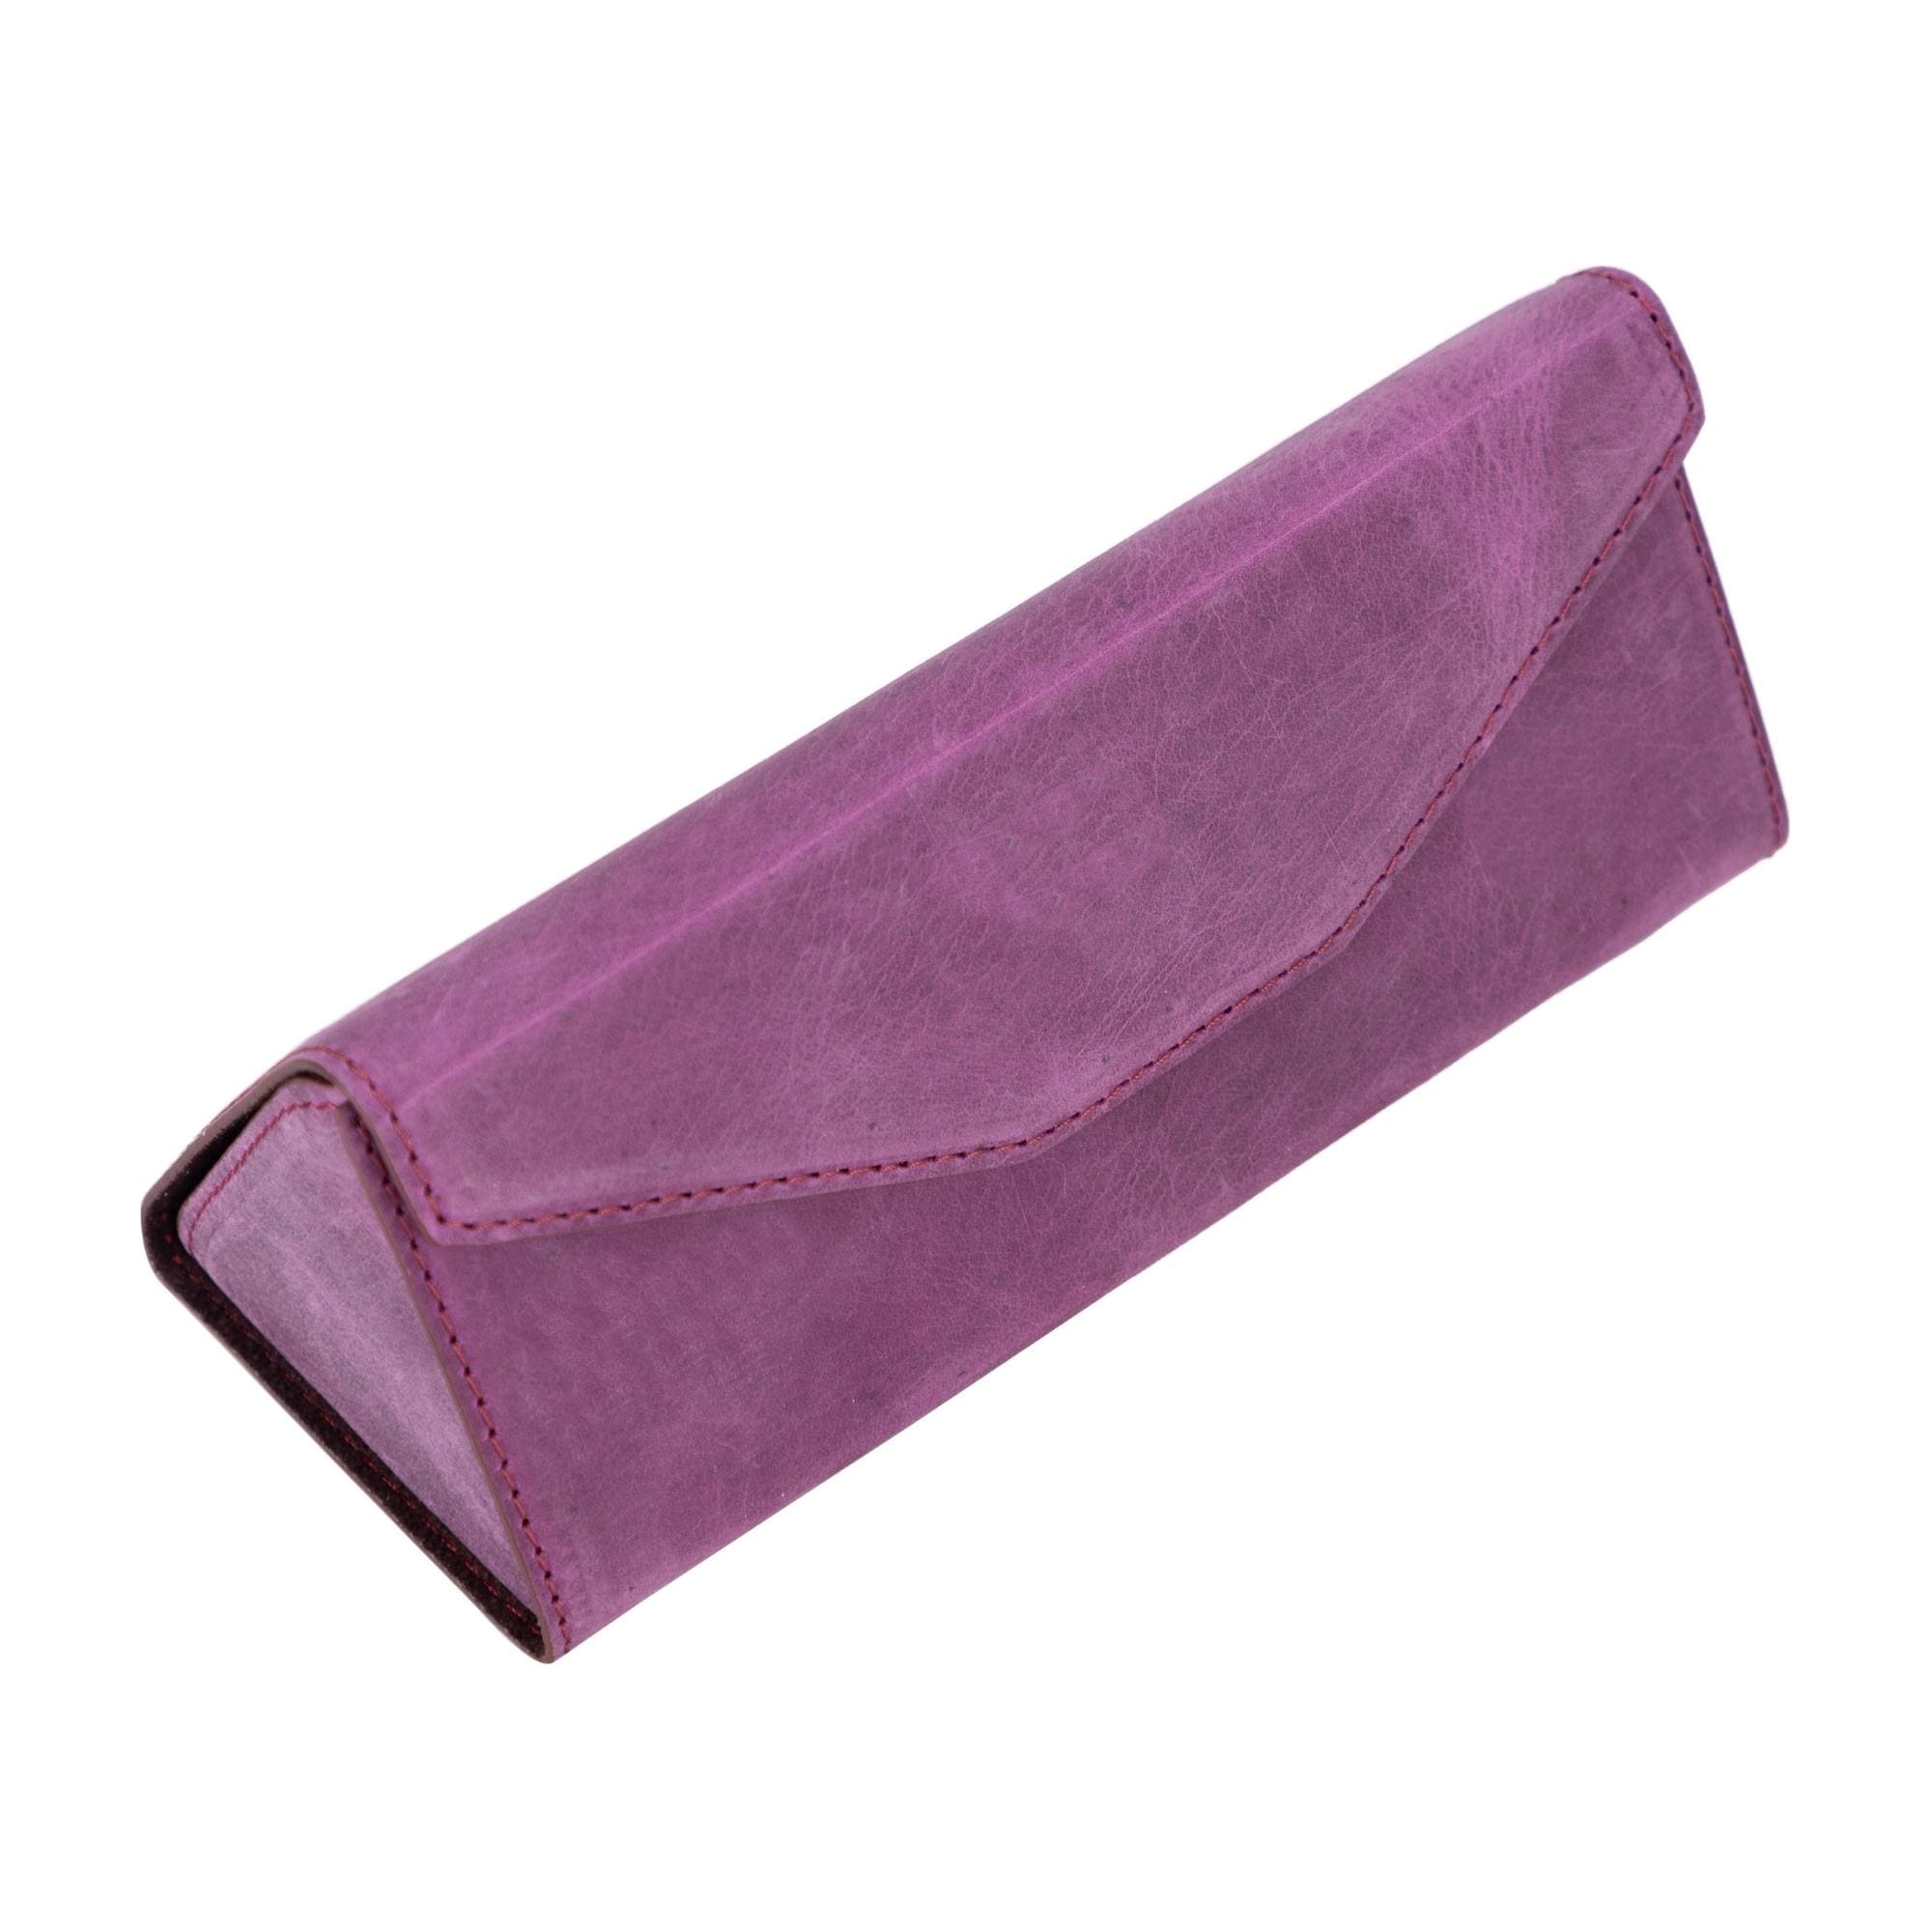 Triangle Leather Cases for Glasses and Sun Glasses - Purple - TORONATA